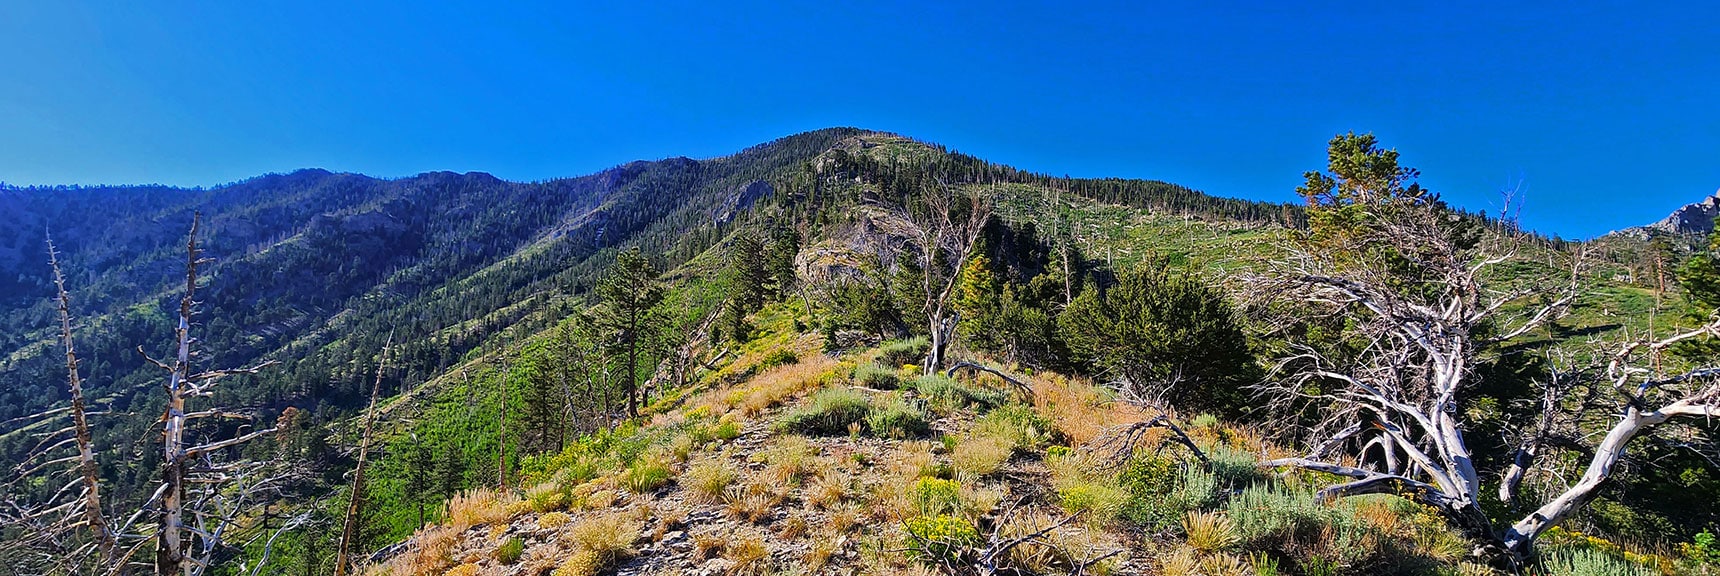 Prior Image: View from Below Ponderosa Stretch Up Western Ridge to Harris Mt. Summit. | Harris Mountain Triangle | Mt Charleston Wilderness, Nevada